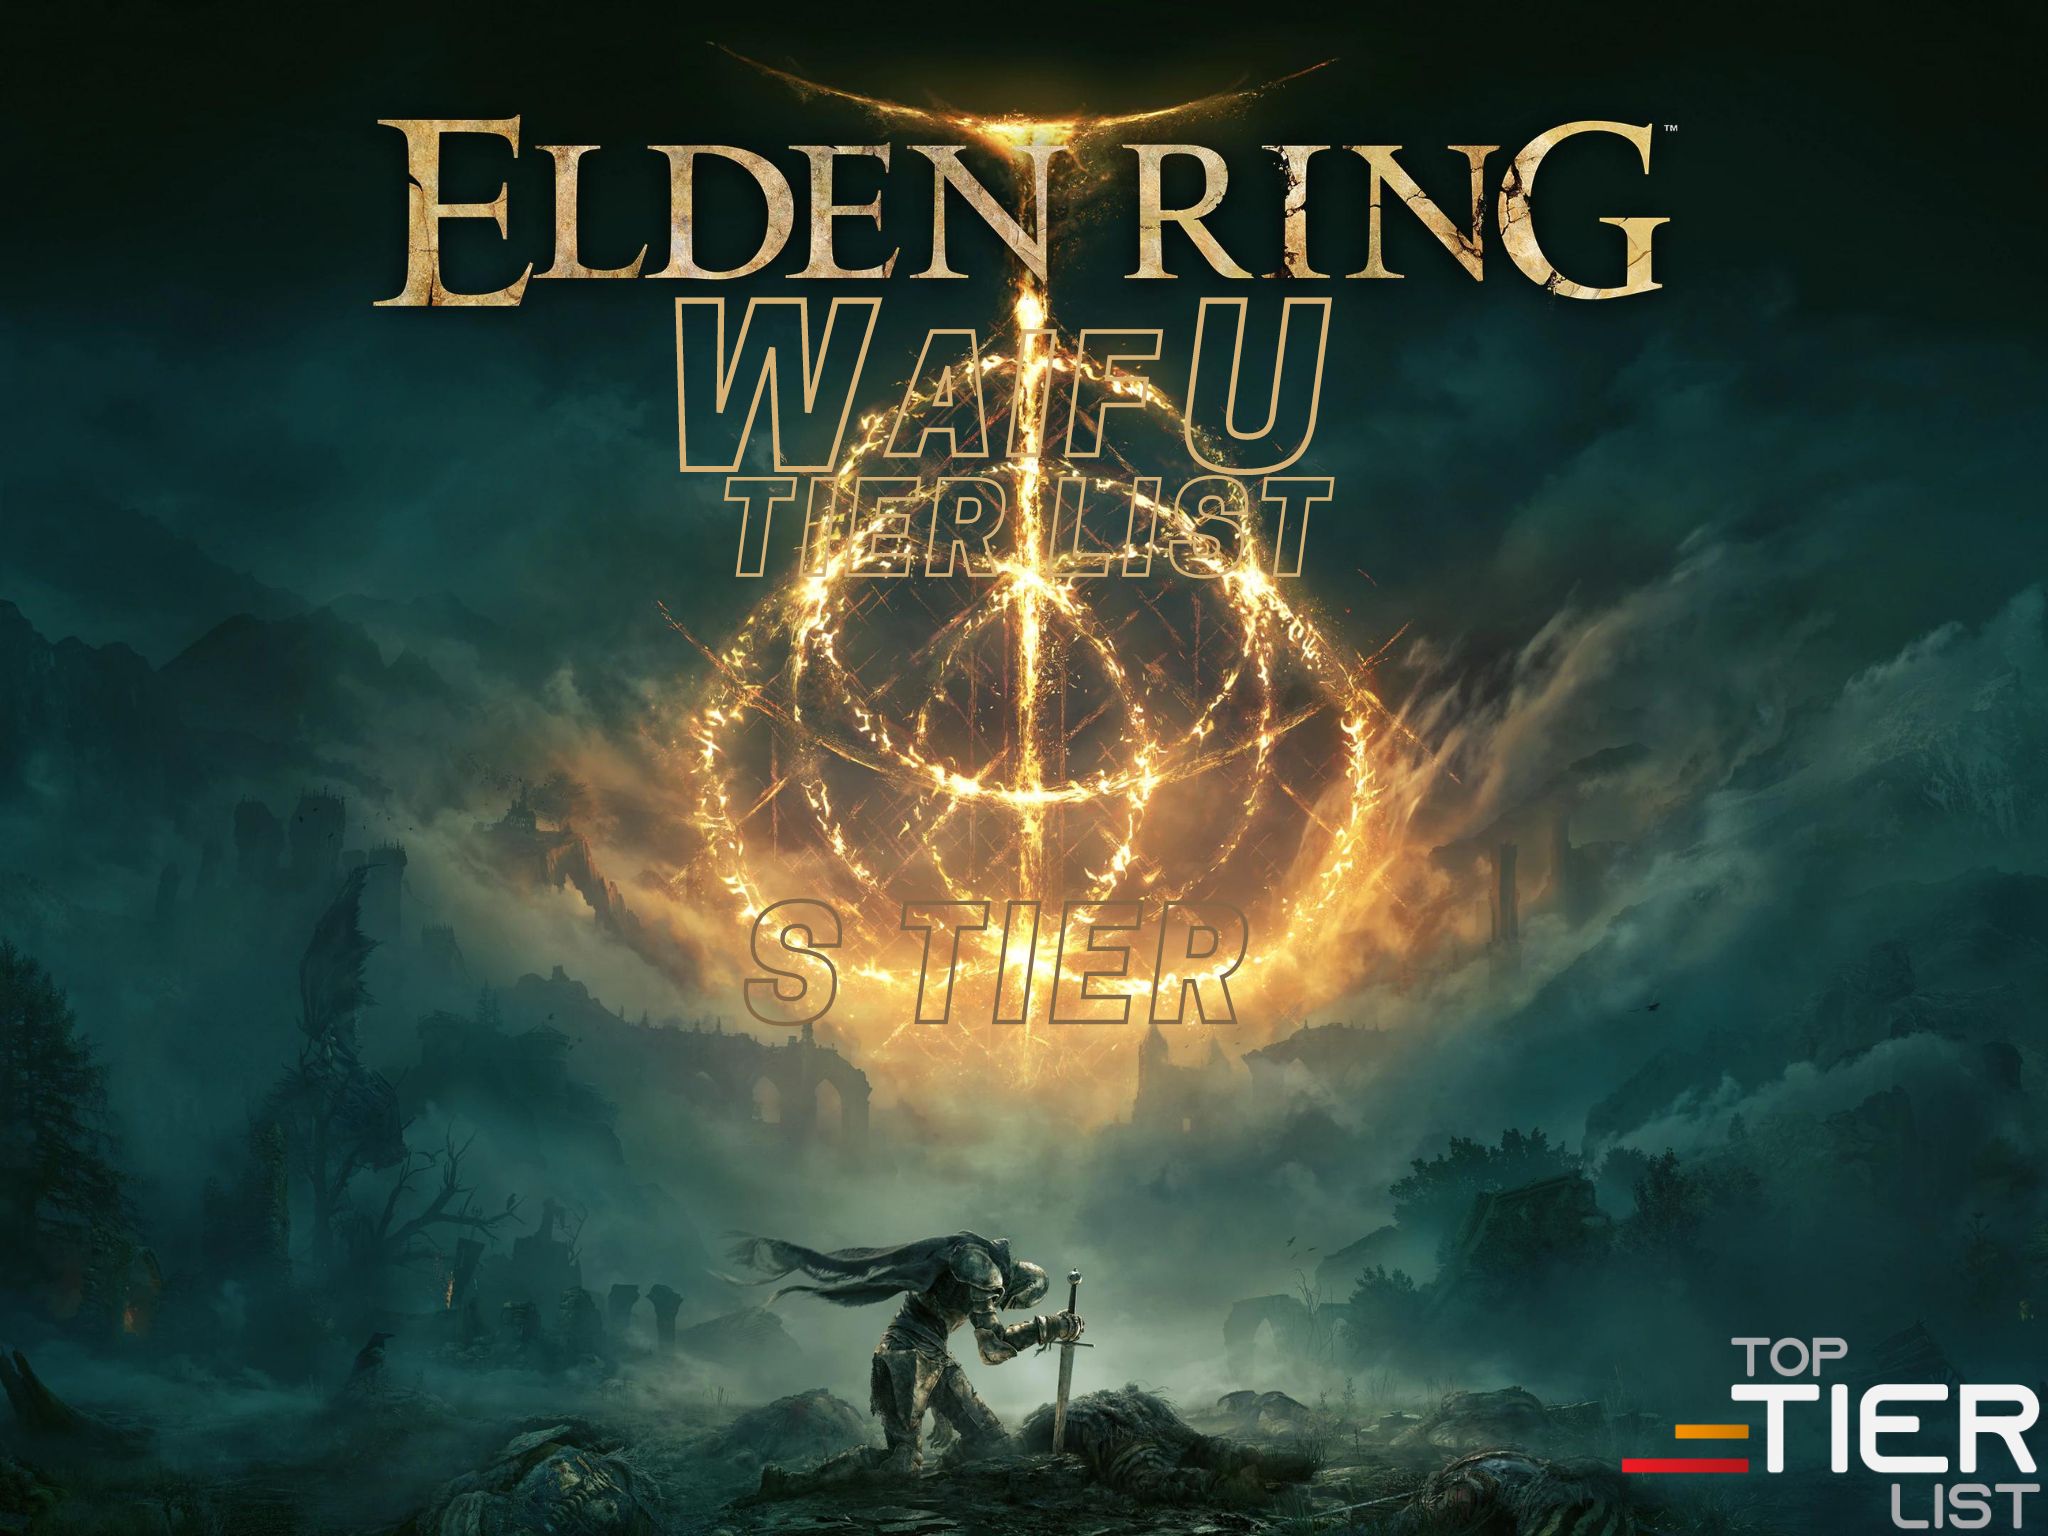 Superb waifus of Elden Ring.